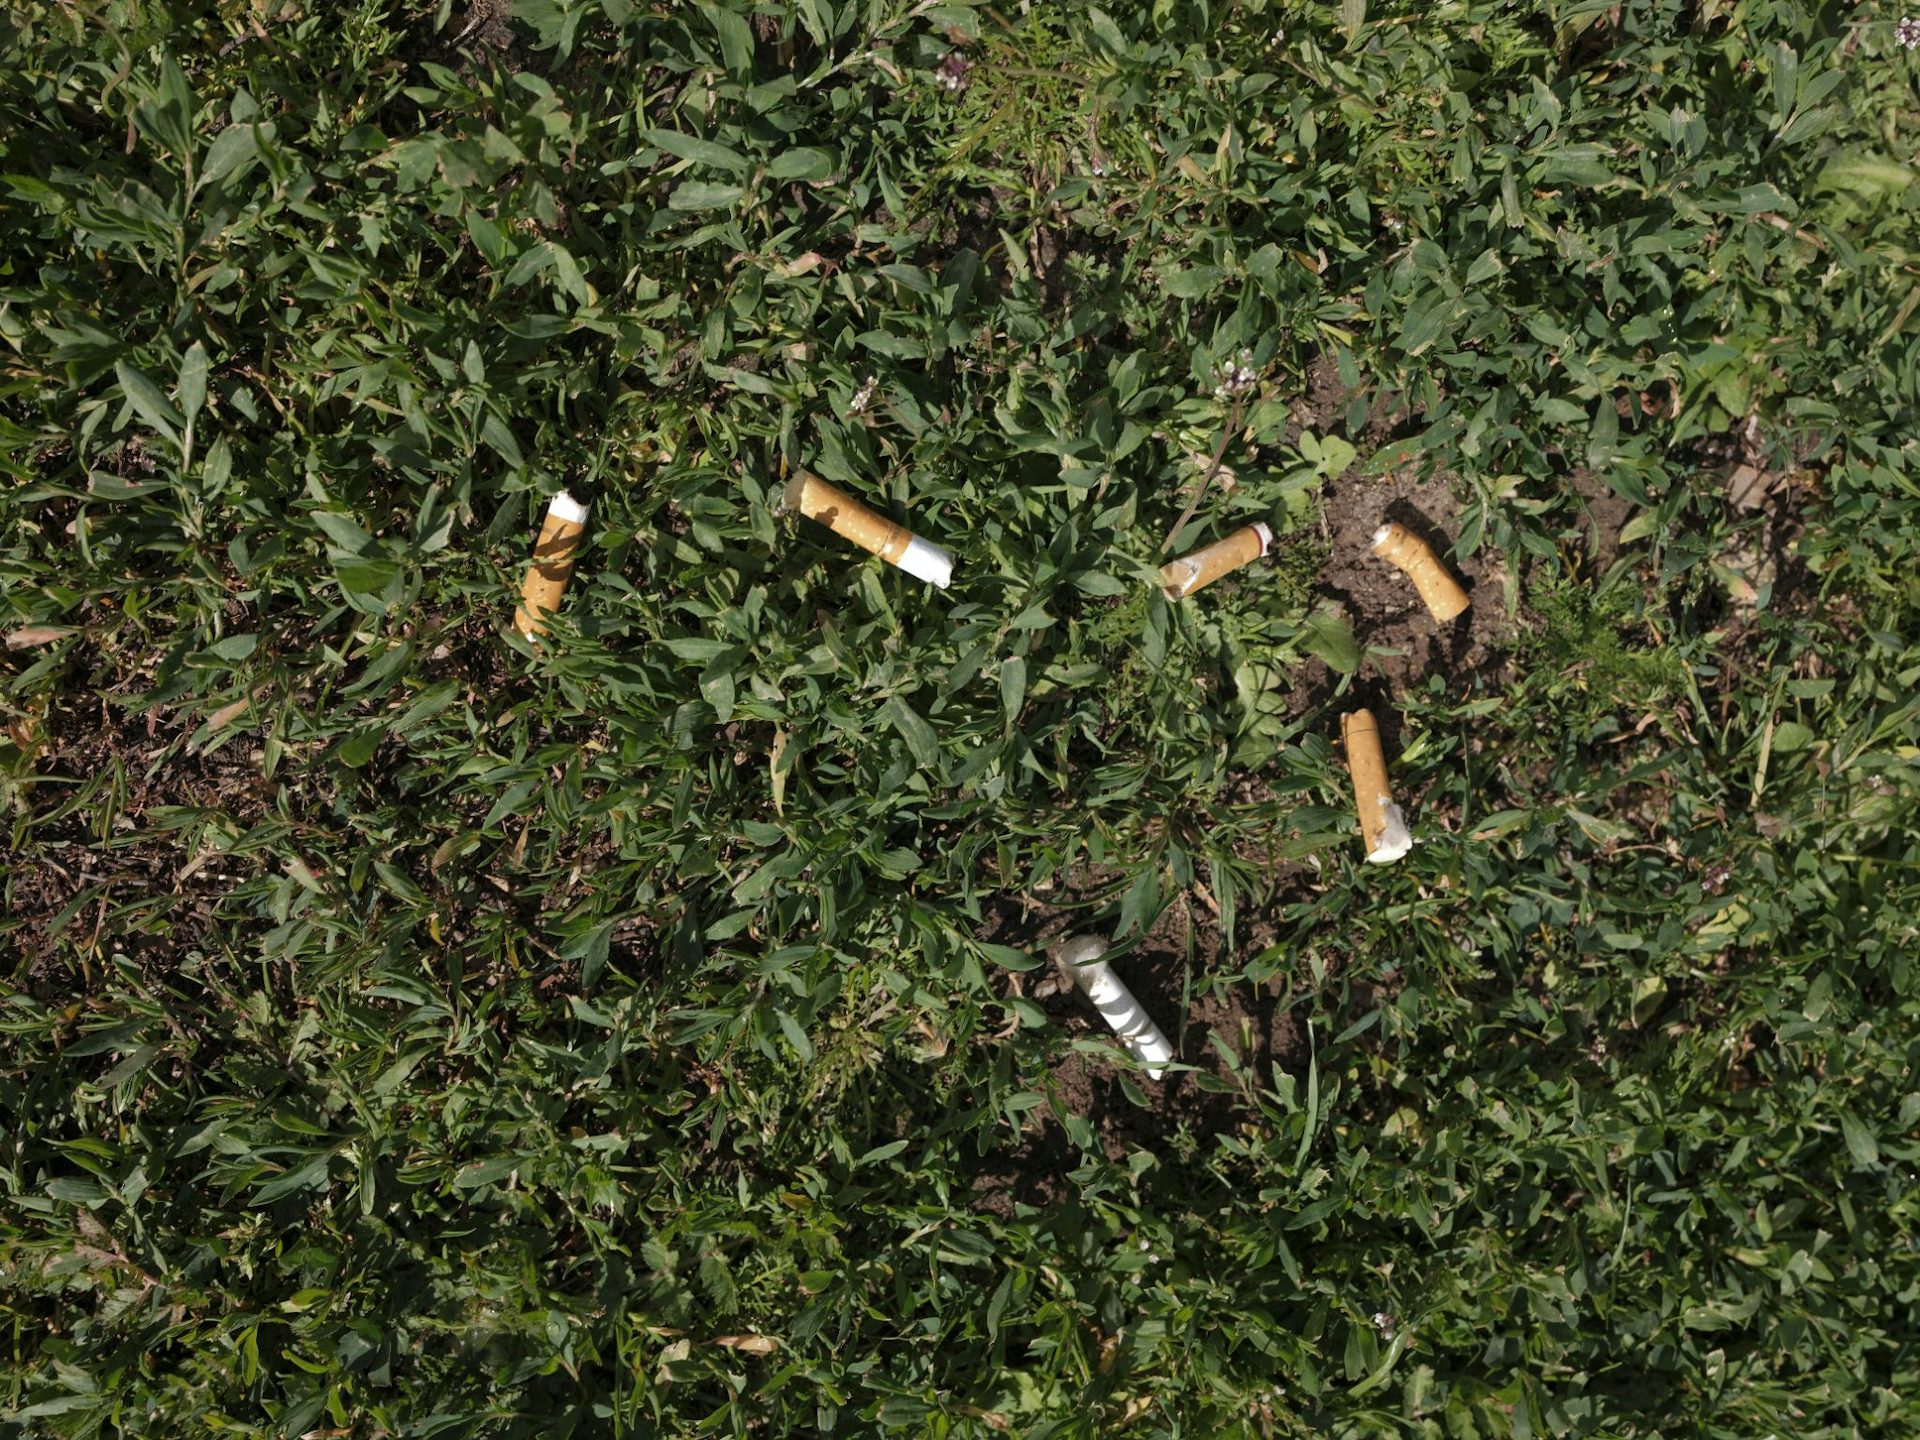 Cigarette butts in grass